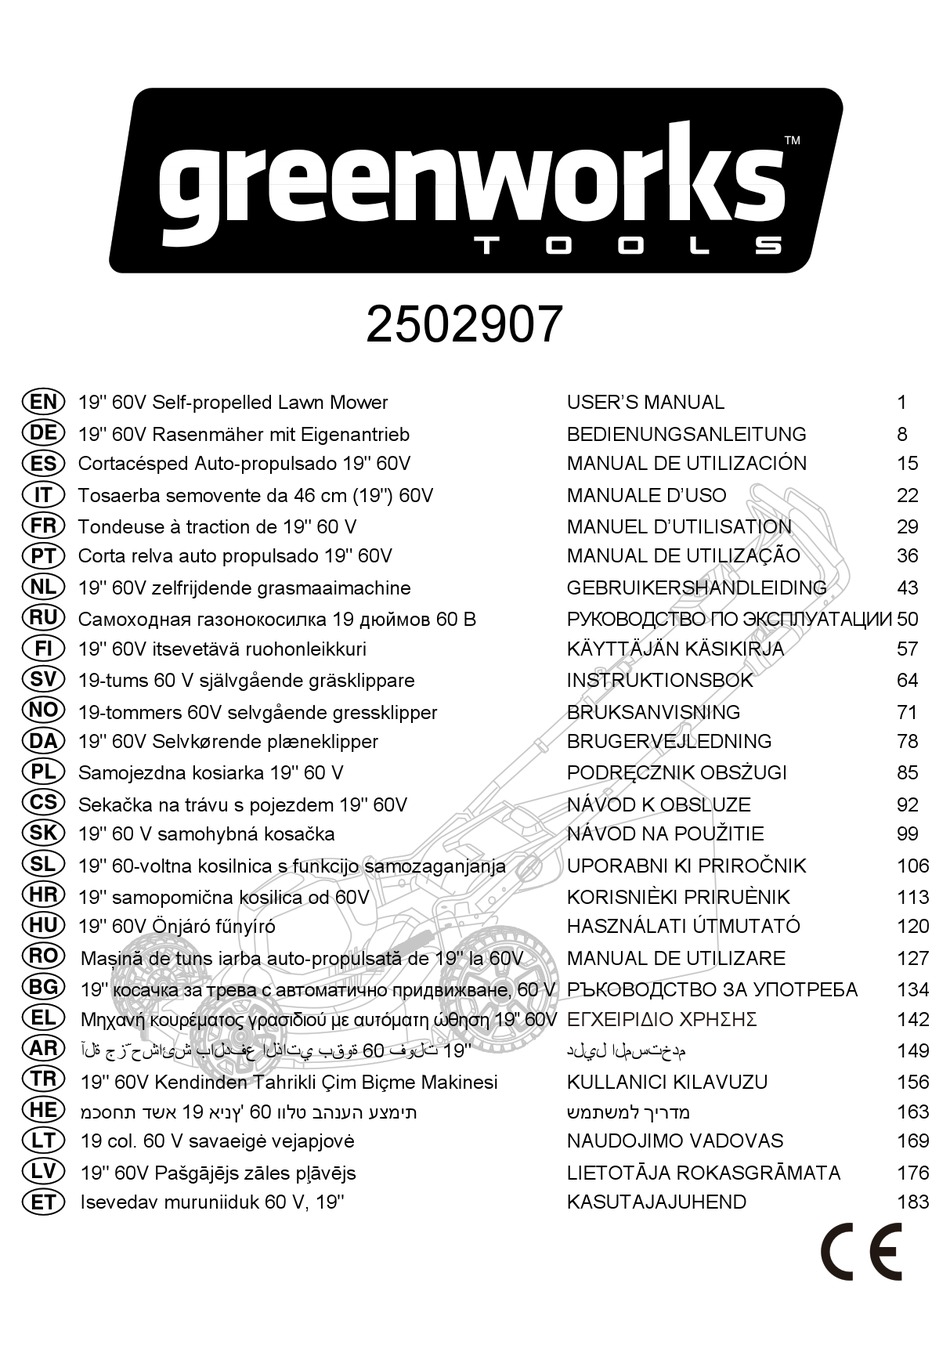 GREENWORKS TOOLS 2502907 USER MANUAL Pdf Download | ManualsLib